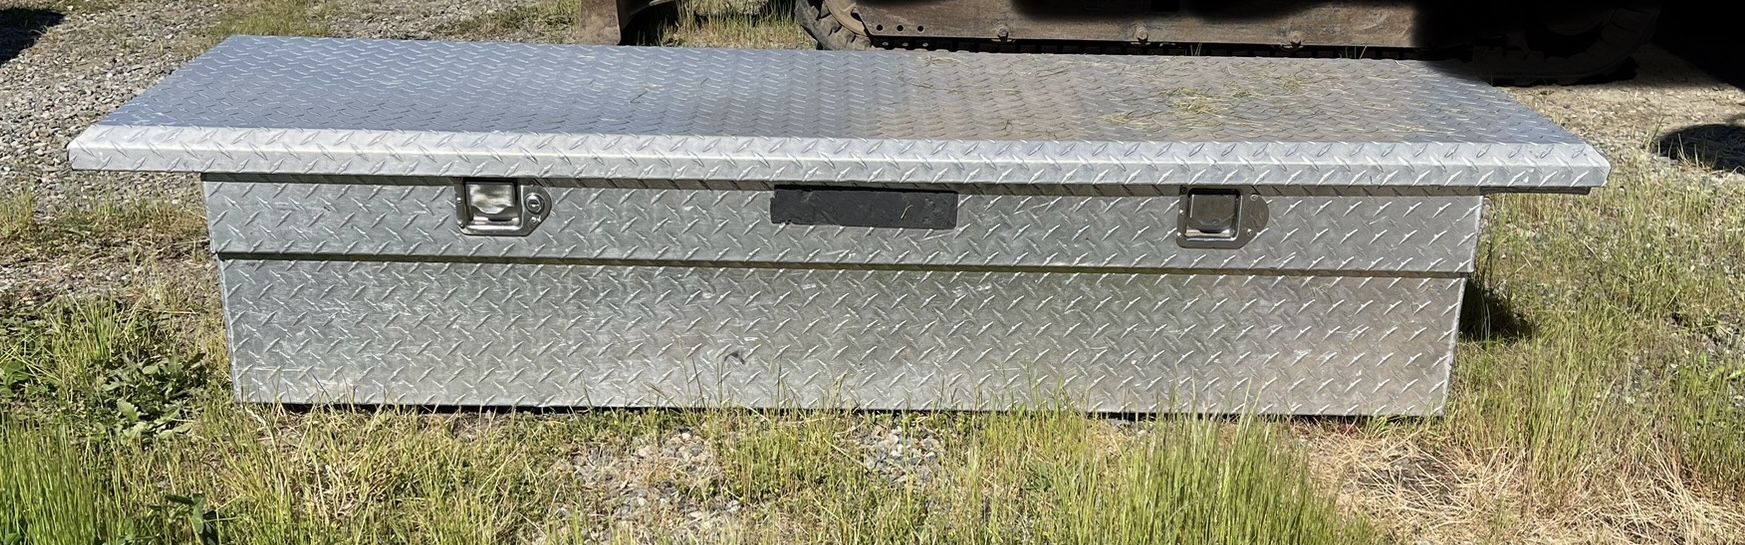 Aluminum Truck Bed Box - Used 